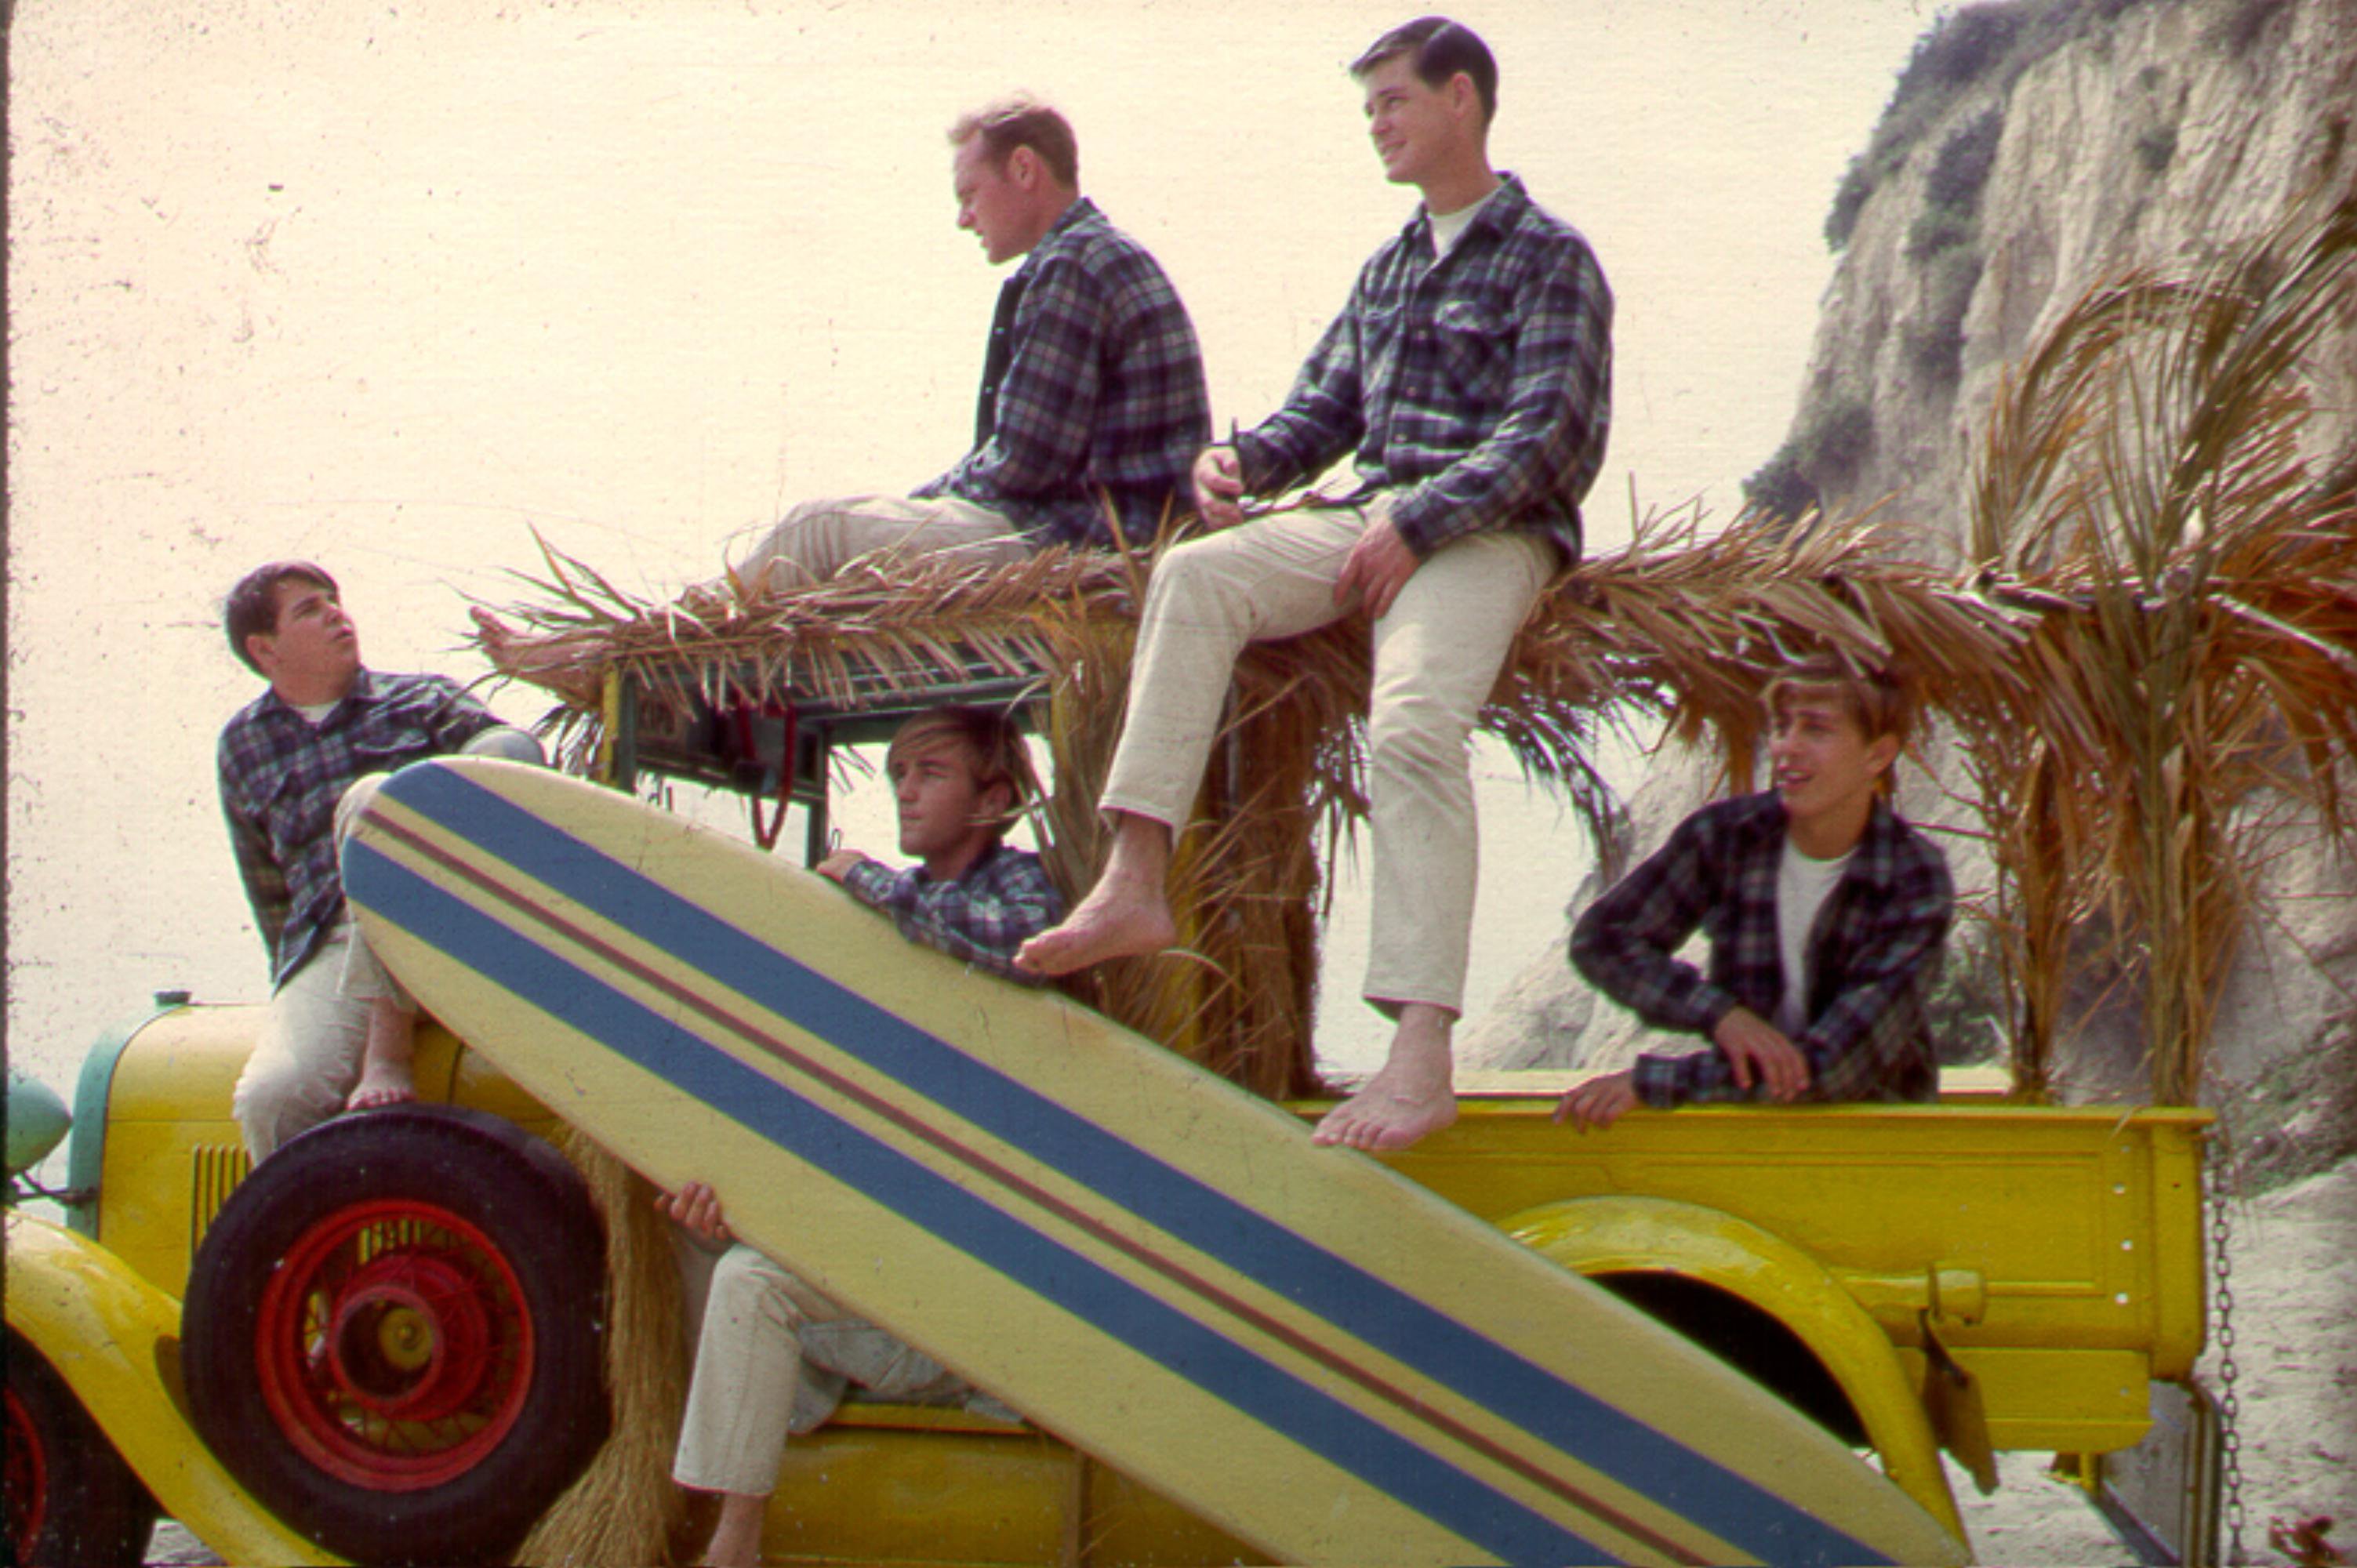 The Beach Boys' Carl Wilson, Mike Love, Dennis Wilson, Brian Wilson, and David Marks with a yellow car